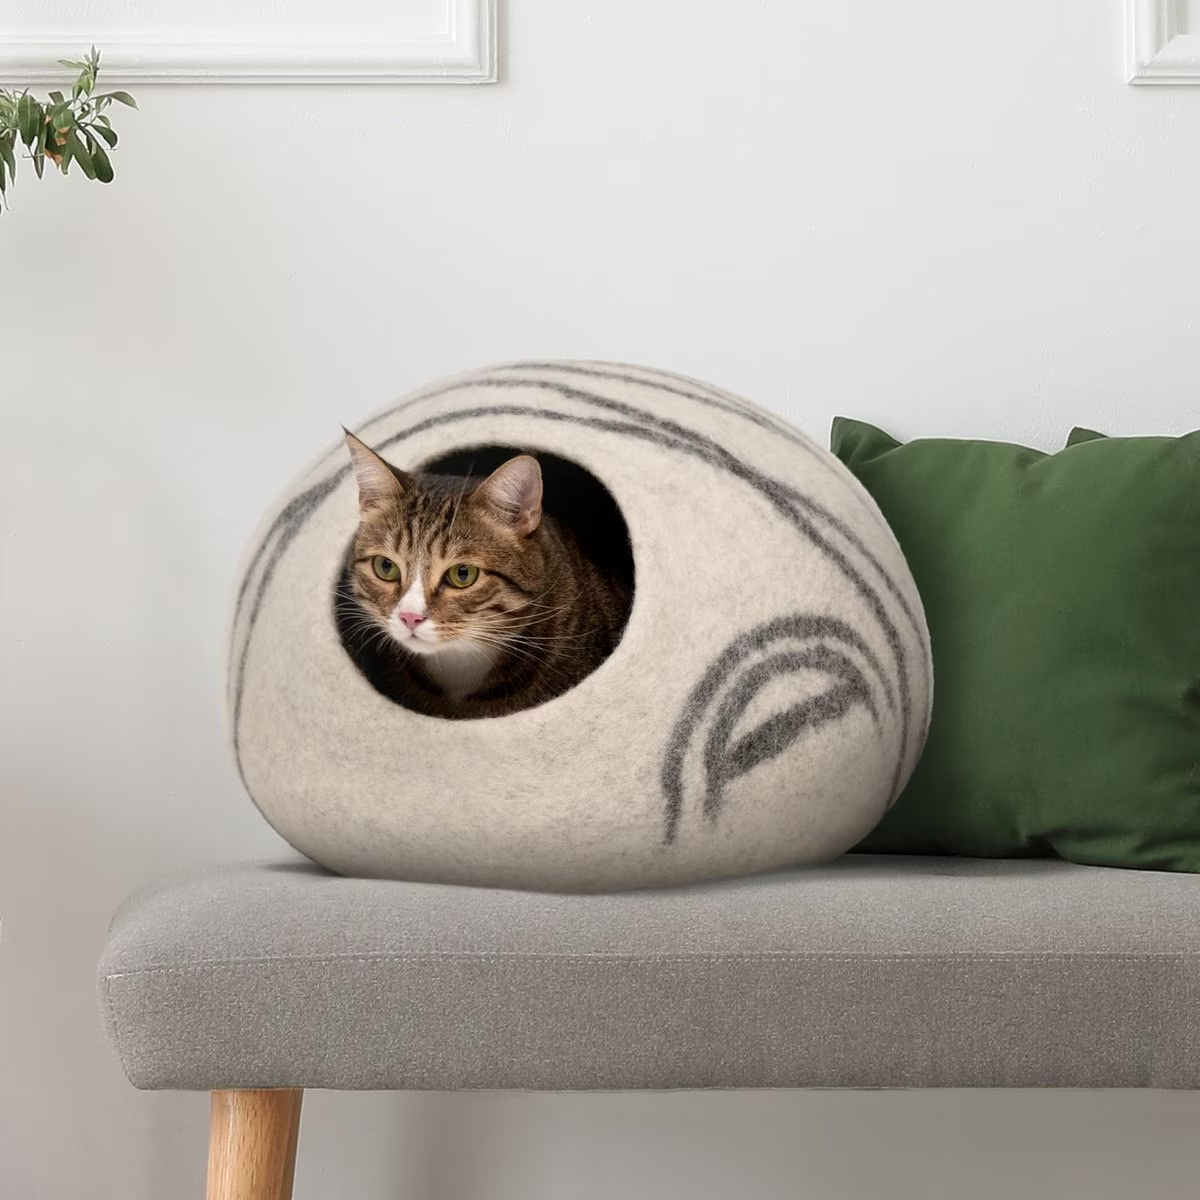 Meowfia Premium Felt Cat Cave Bed New